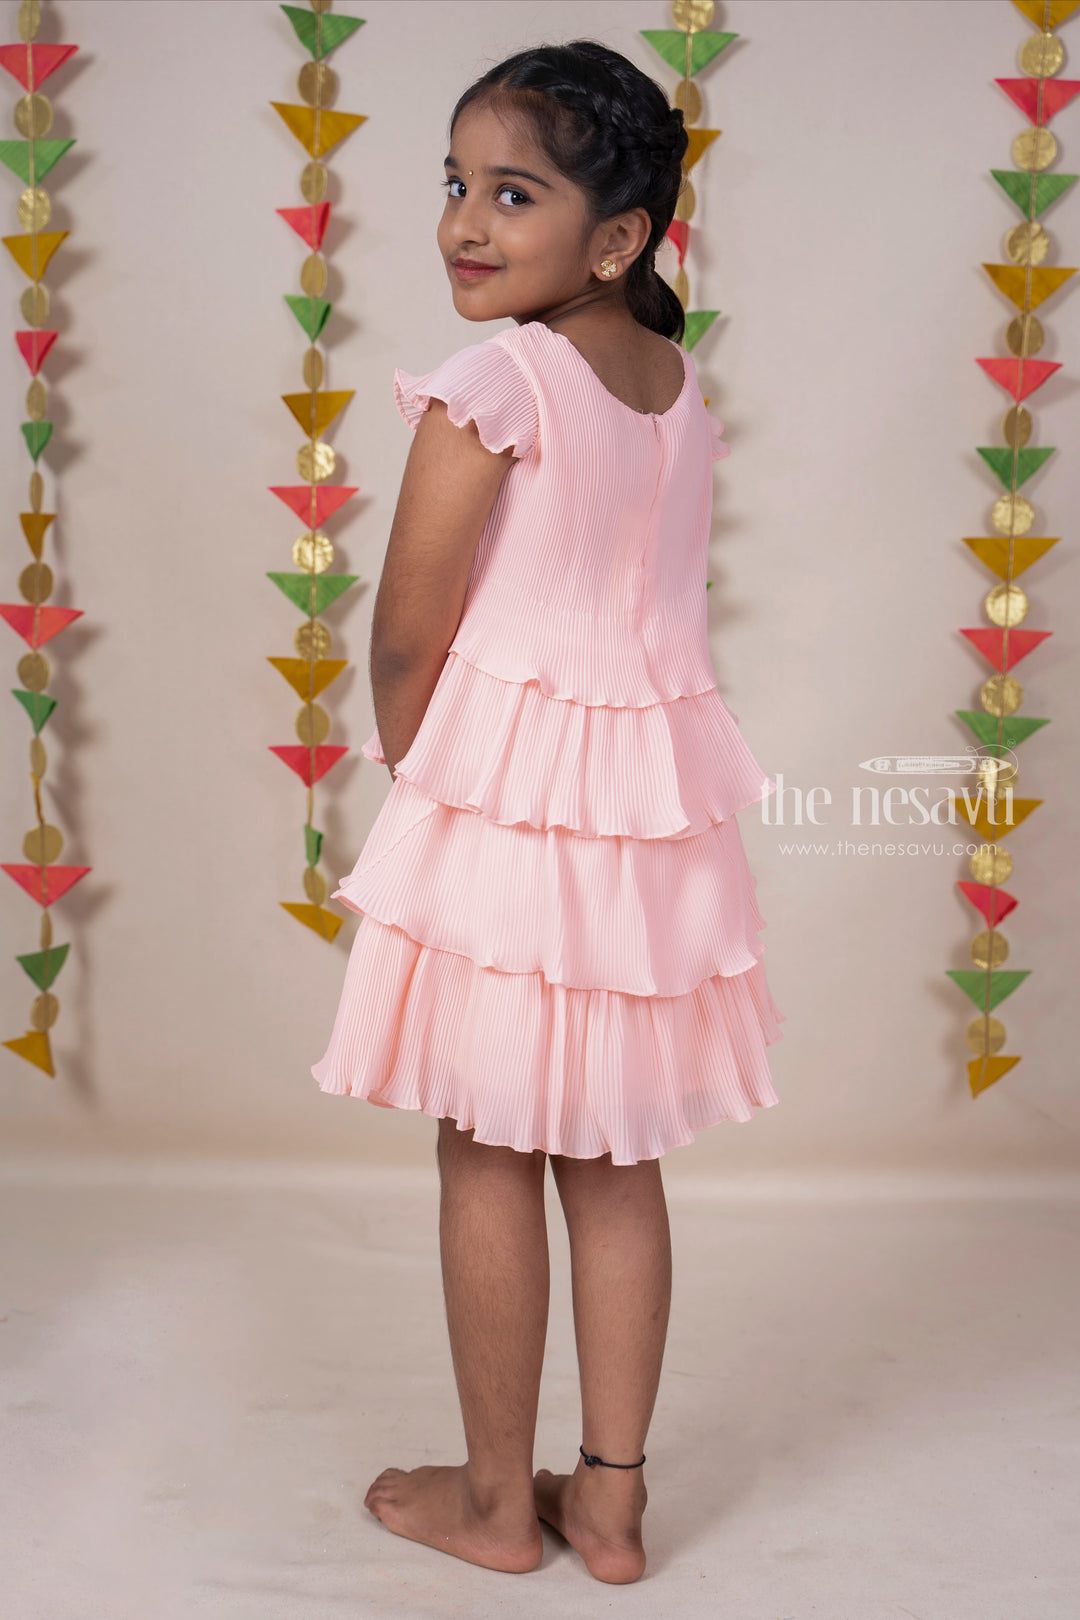 The Nesavu Frocks & Dresses Coral Pink Semi crushed Crepe Designer Cotton Frock For Baby Girls psr silks Nesavu